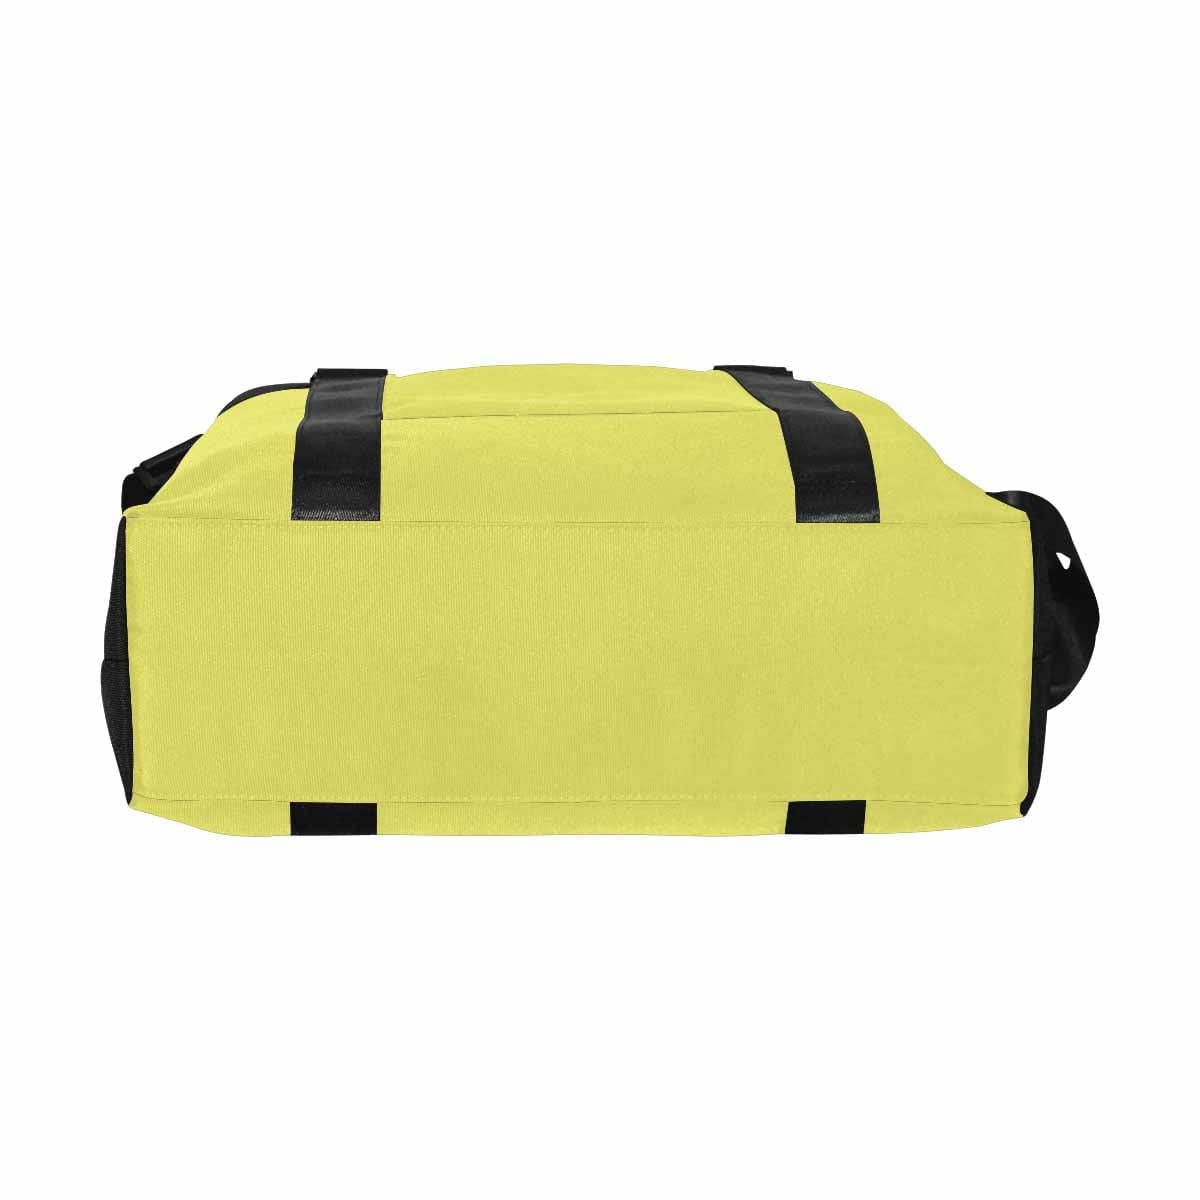 Honeysuckle Yellow Duffel Bag Large Travel Carry On - Bags | Duffel Bags